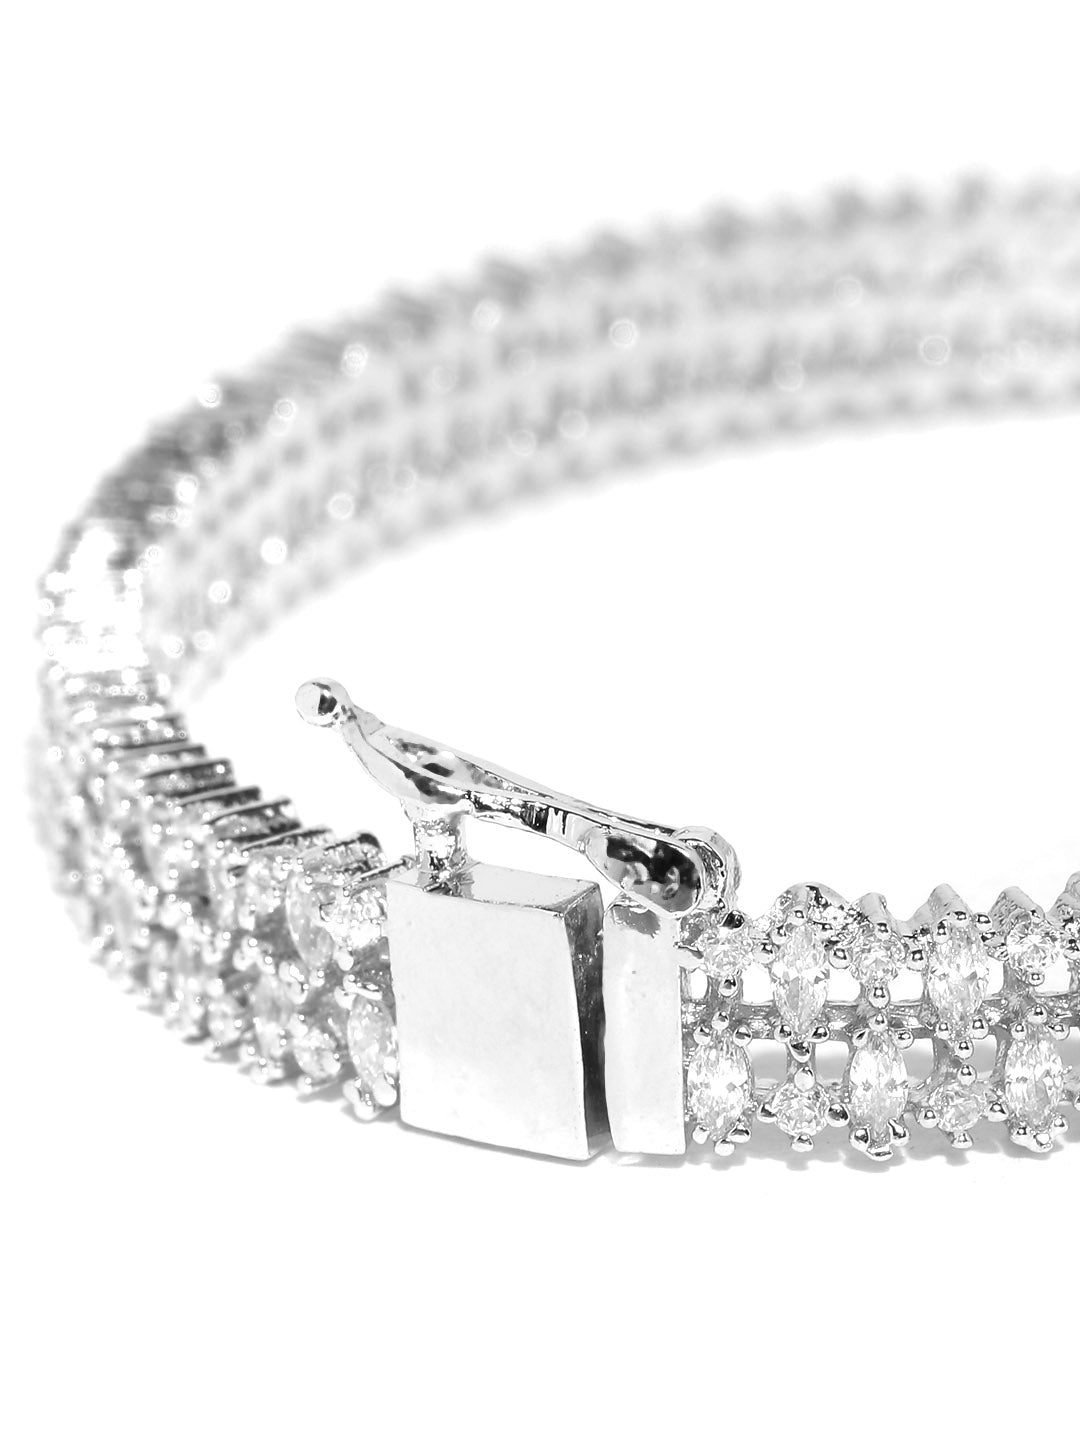 Women's Silver-Plated American Diamond Studded Bracelet - Priyaasi